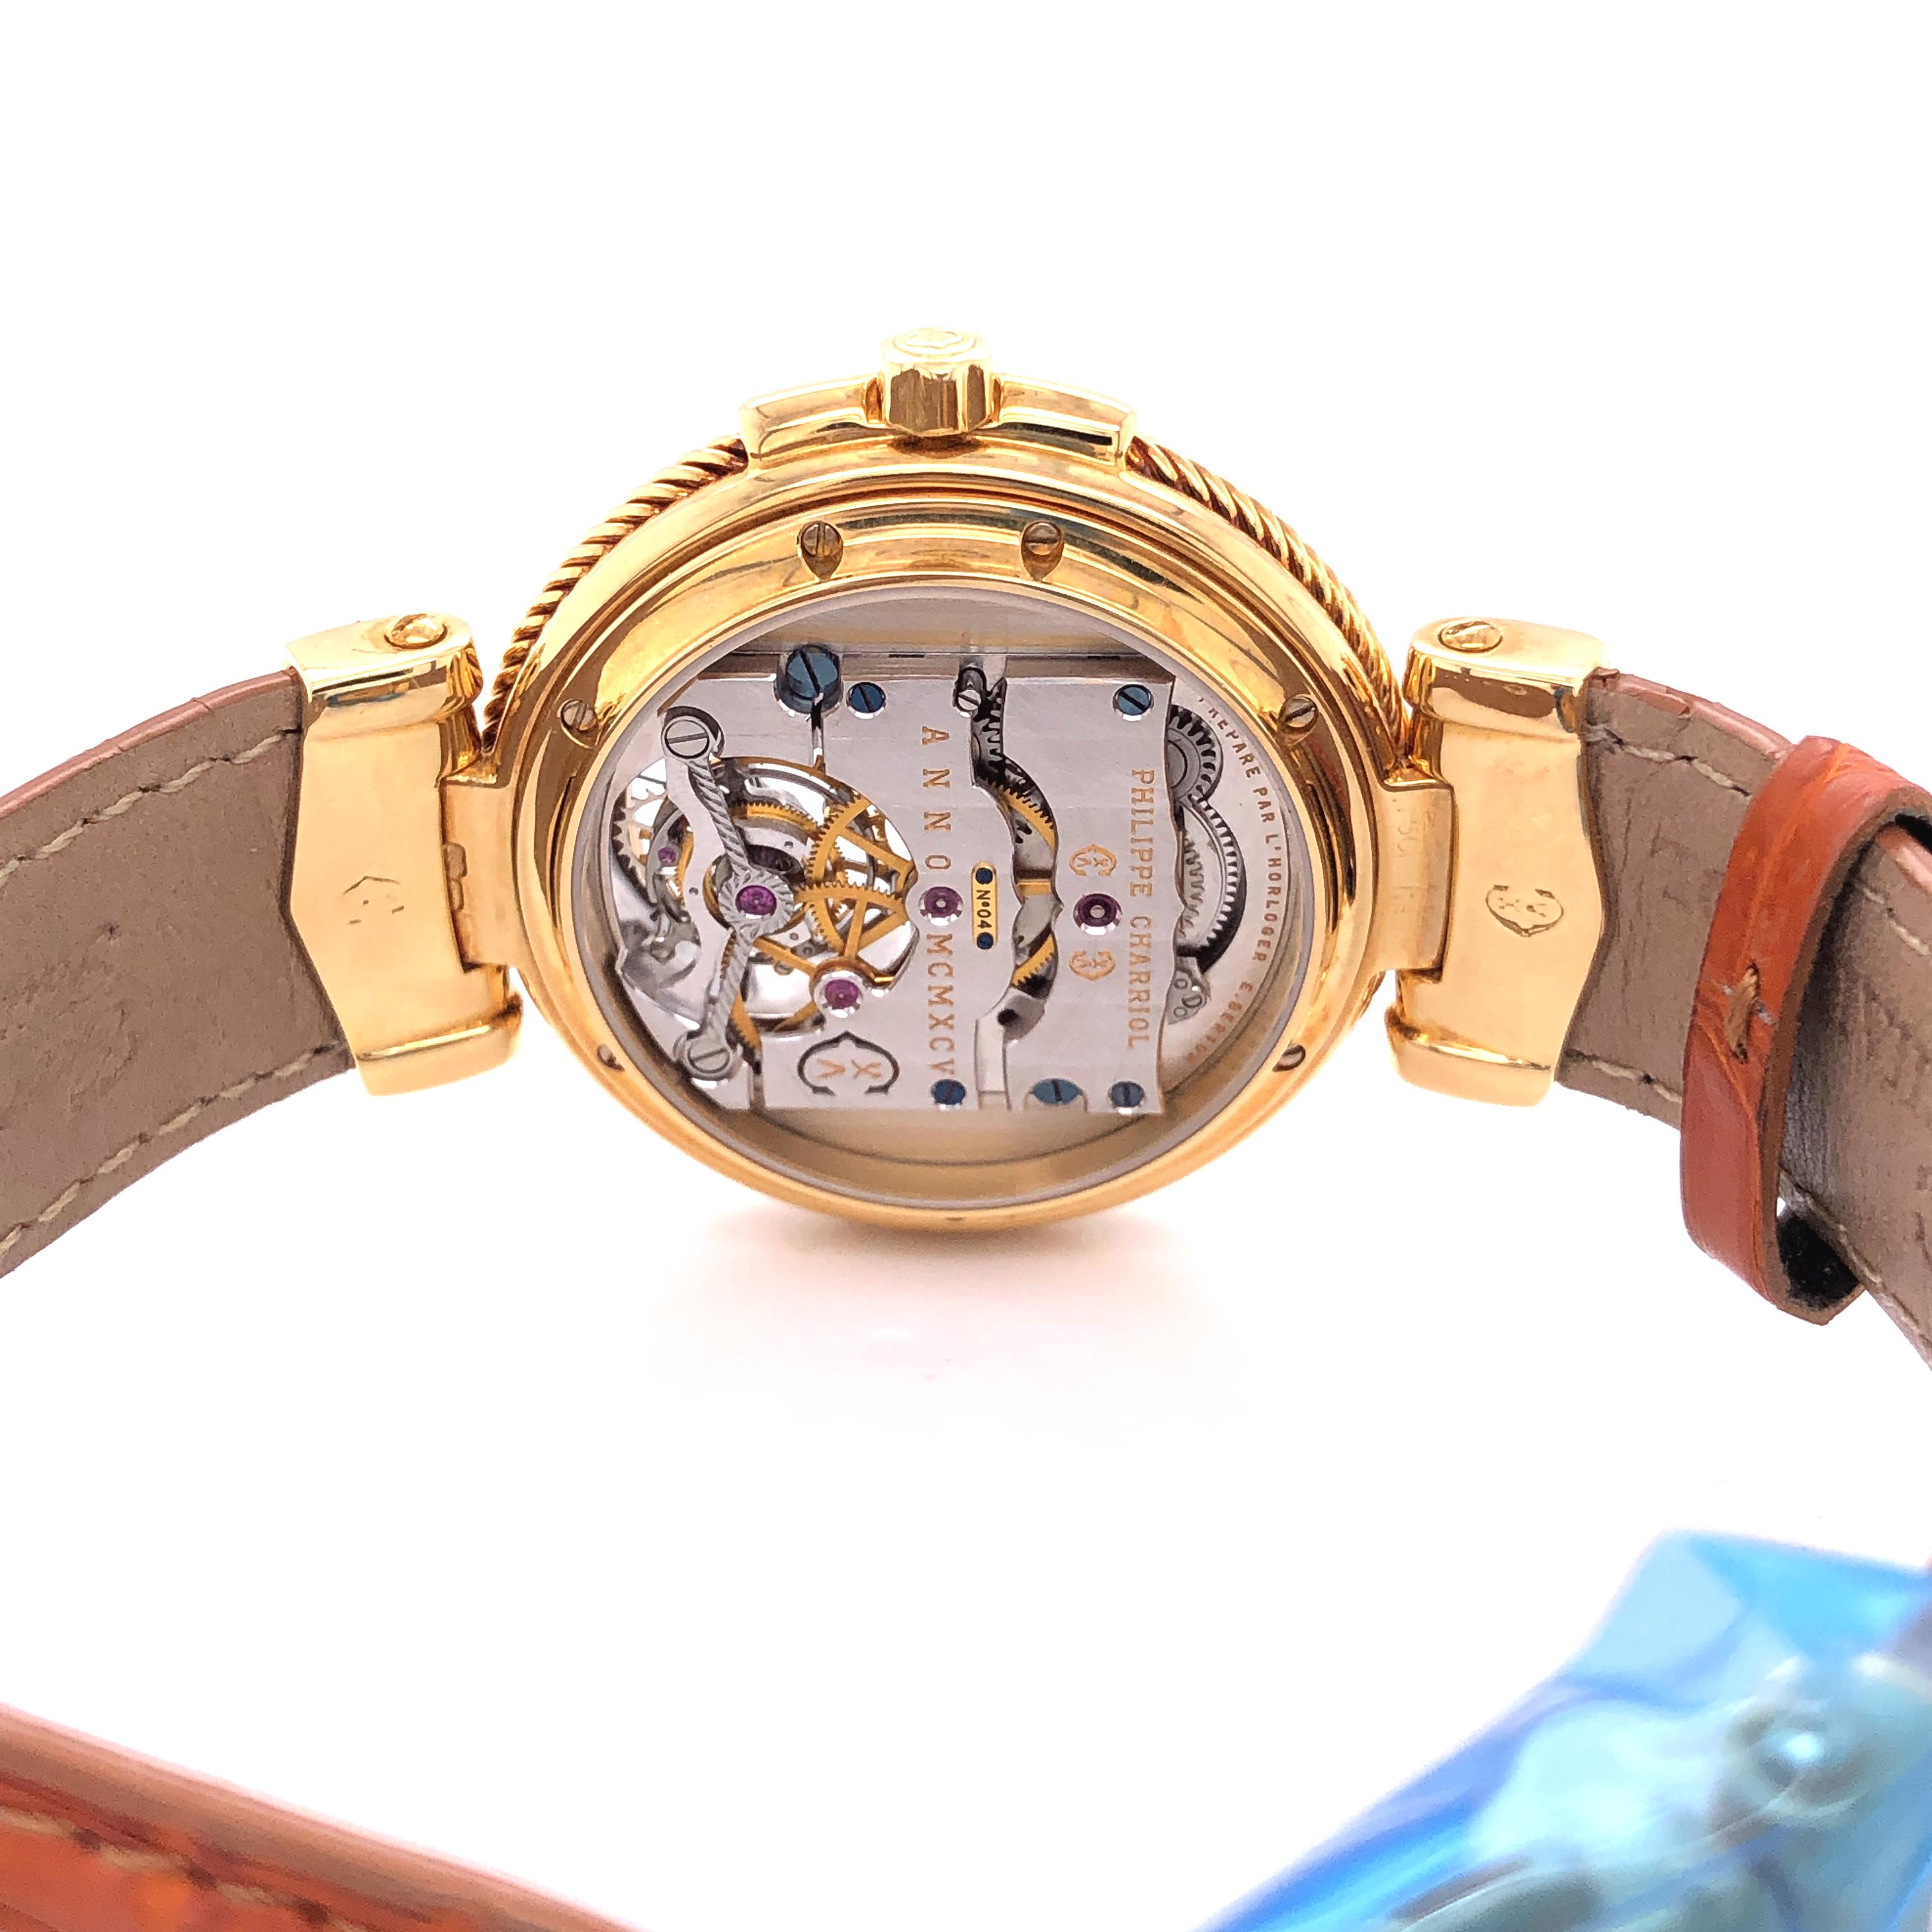 Philippe Charriol Tourbillon 18 Karat Yellow Gold Bezel Watch Limited Edition #4 For Sale 1